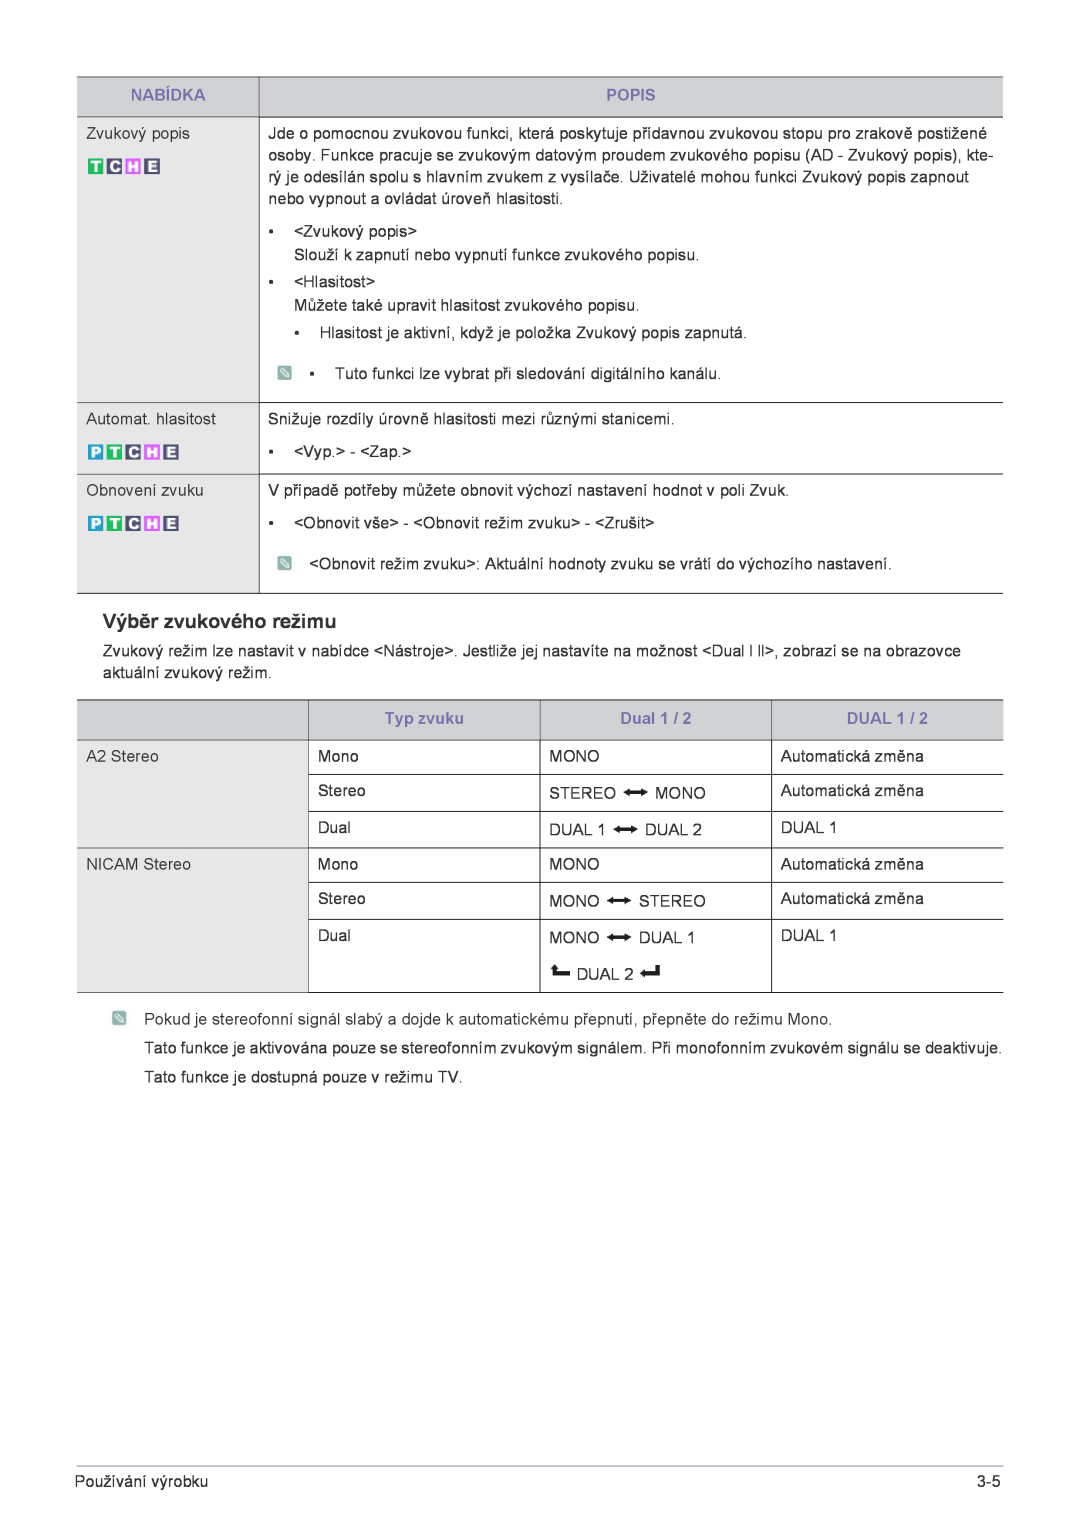 Samsung LS22FMDGF/EN manual Výběr zvukového režimu, Typ zvuku, Dual 1, DUAL 1, Nabídka, Popis 